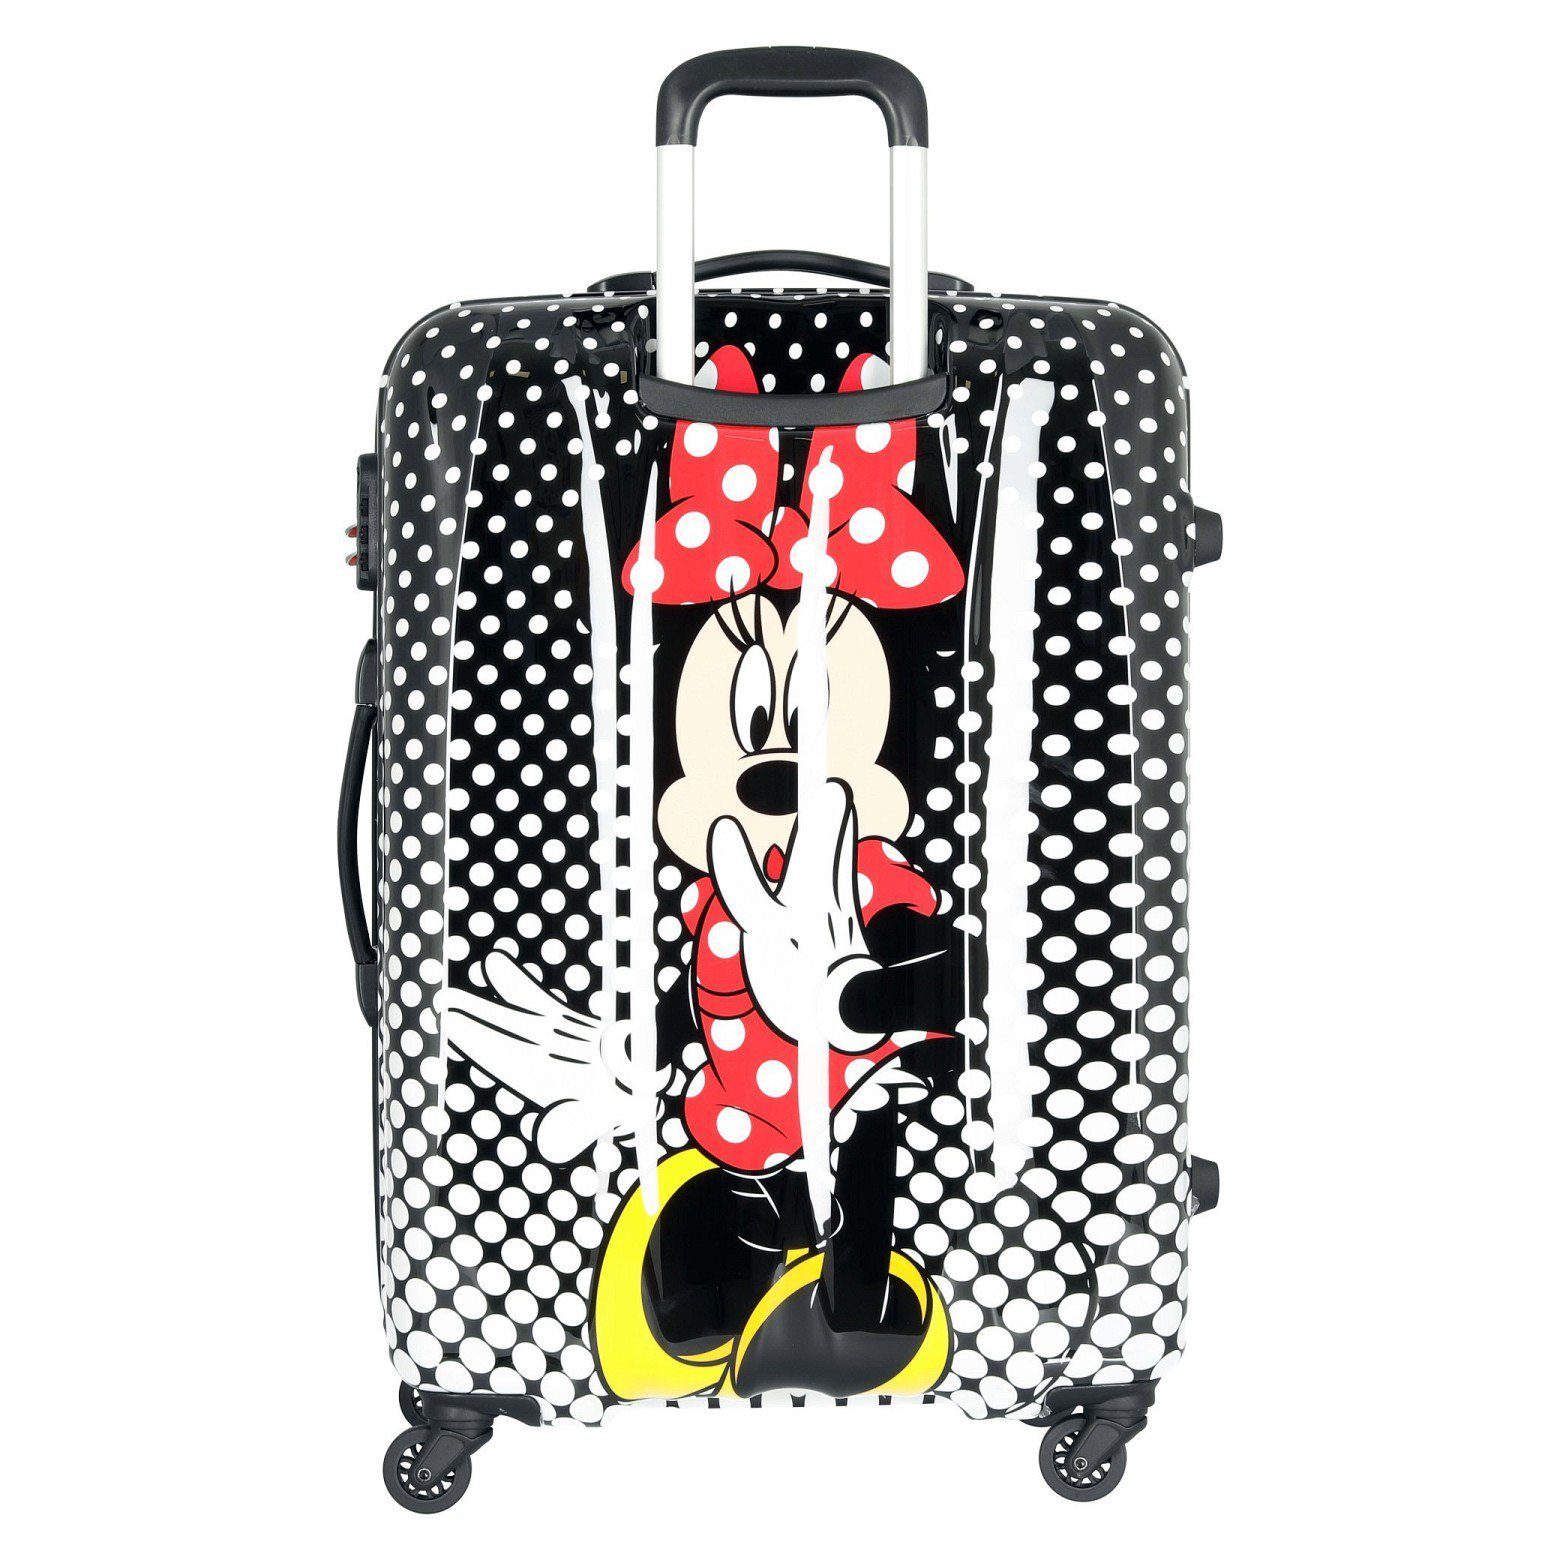 Mouse 4 Polka L - Disney 2.0 4-Rollen-Trolley Rollen Minnie Trolley Alfatwist American Dot 75/28, Tourister®